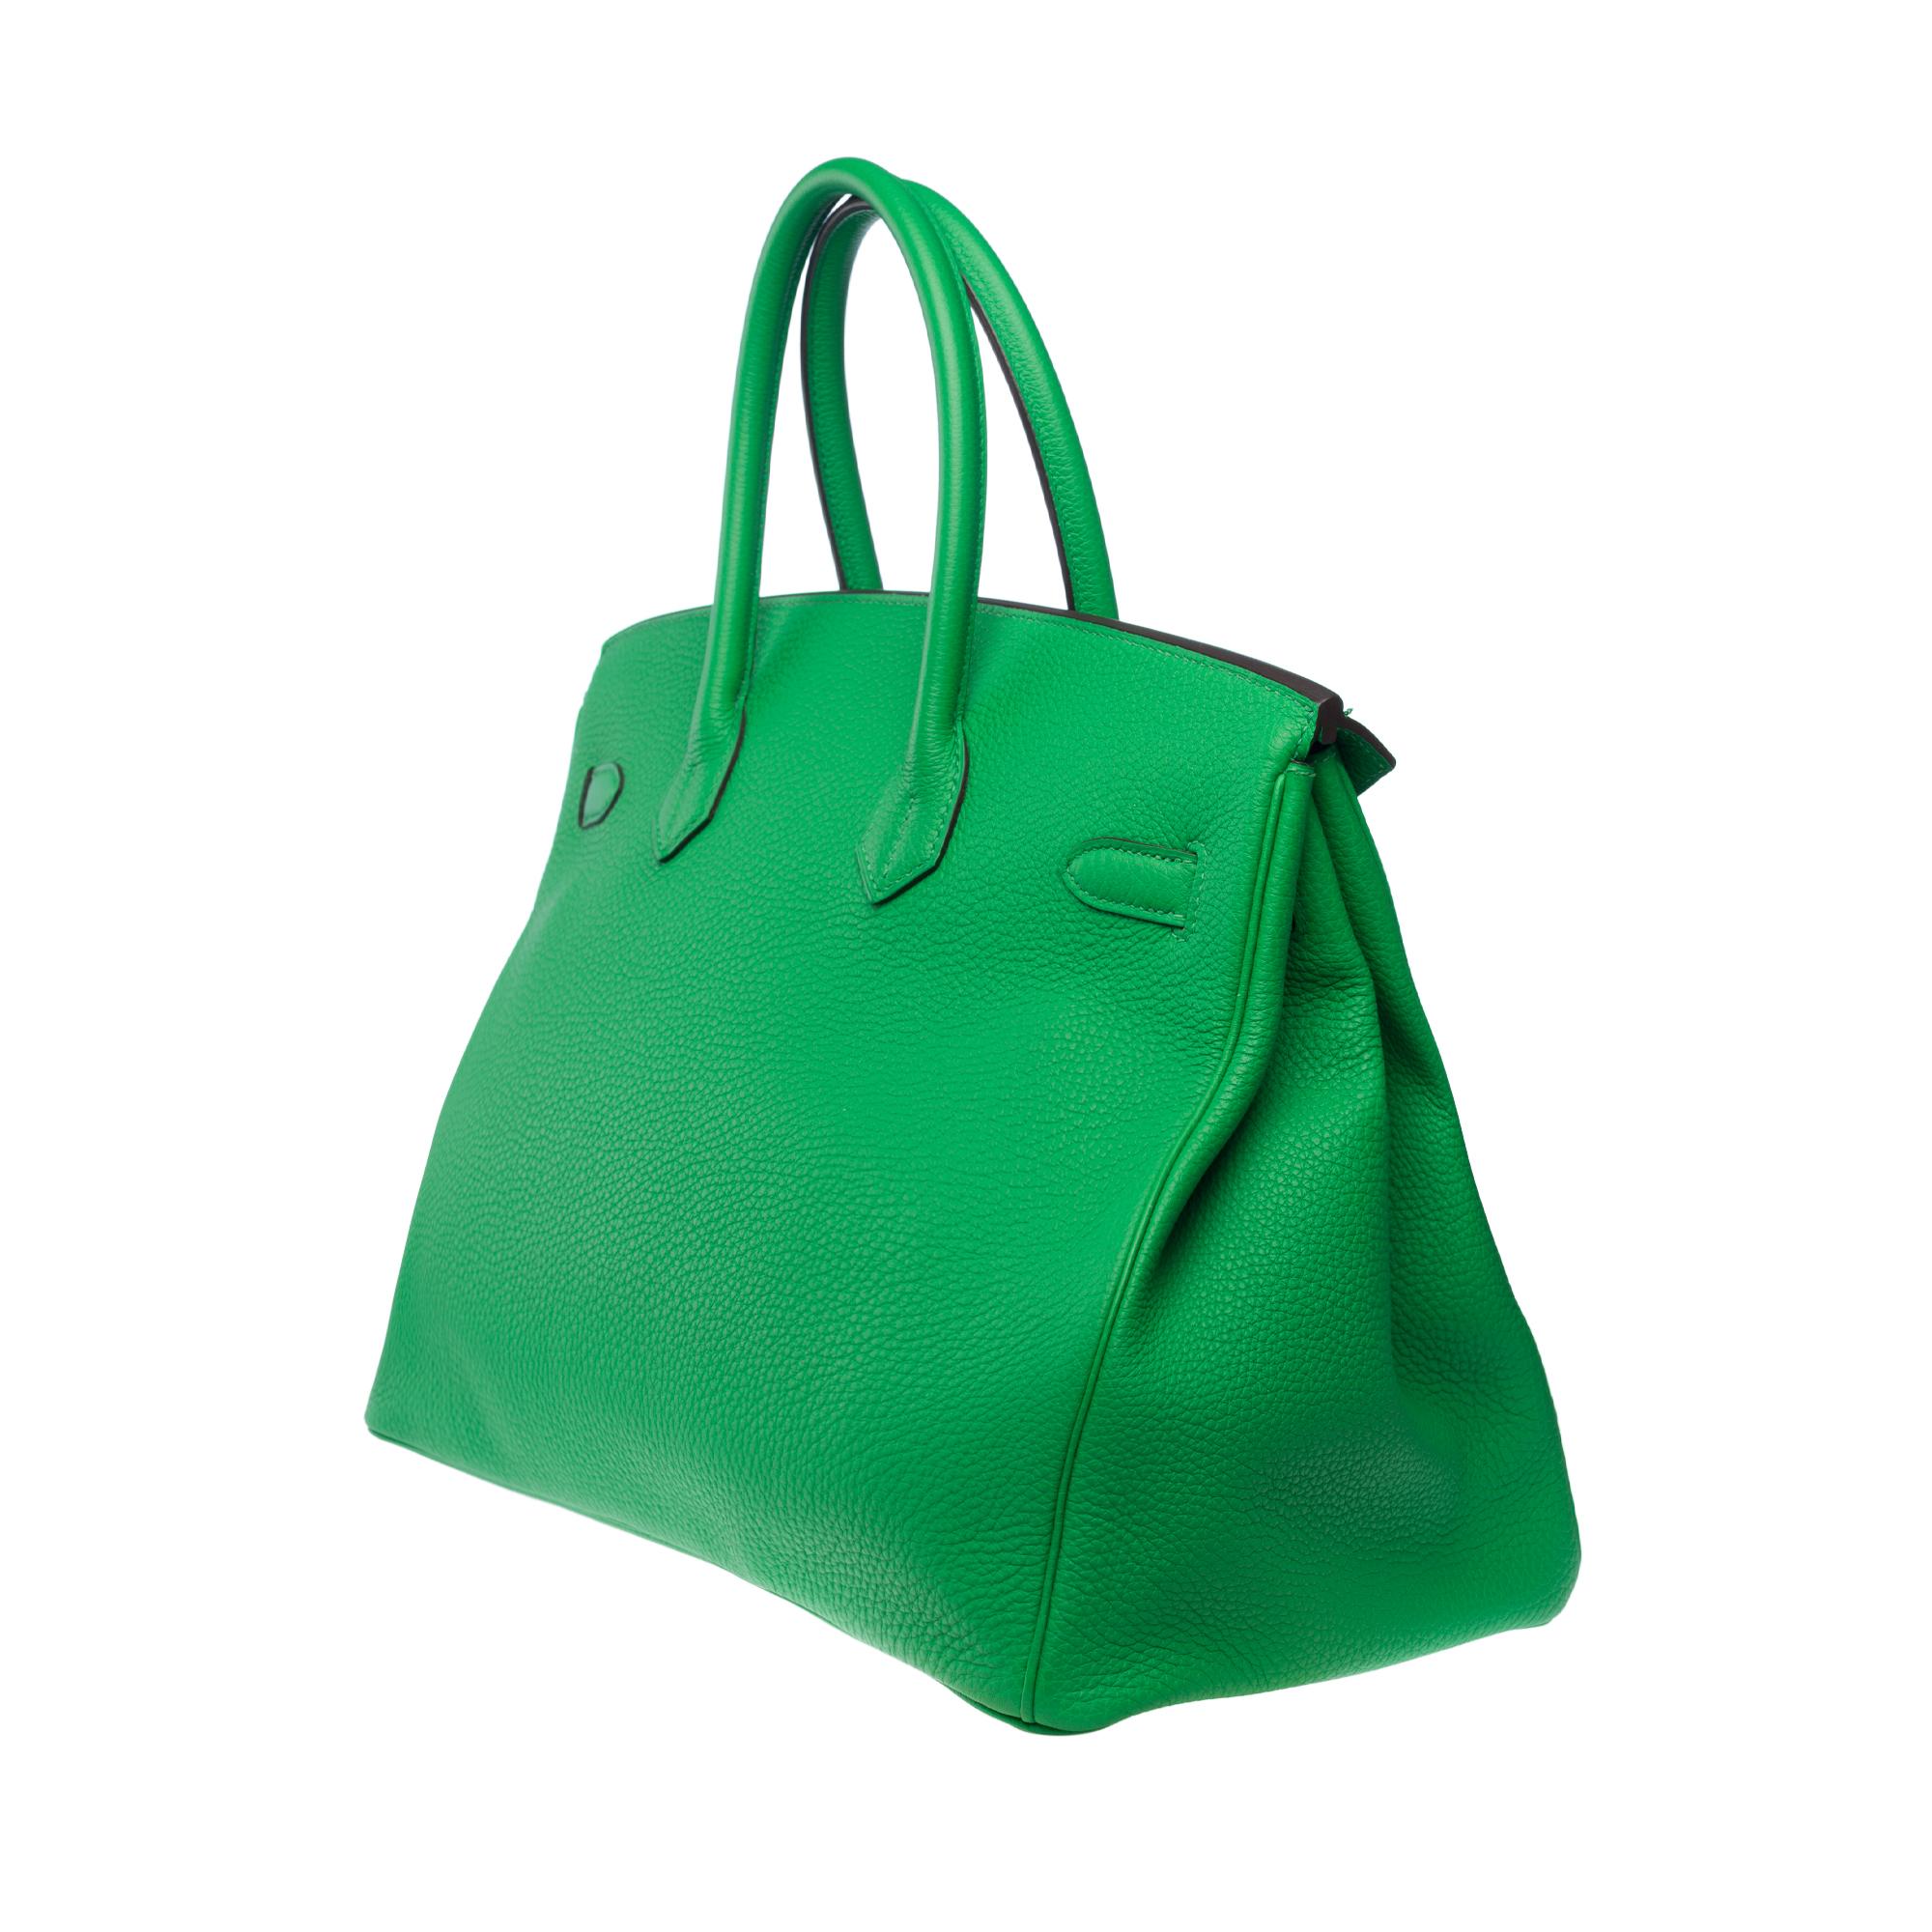 Fantastic Hermès Birkin 35 handbag in Green Bamboo Togo leather, SHW For Sale 3